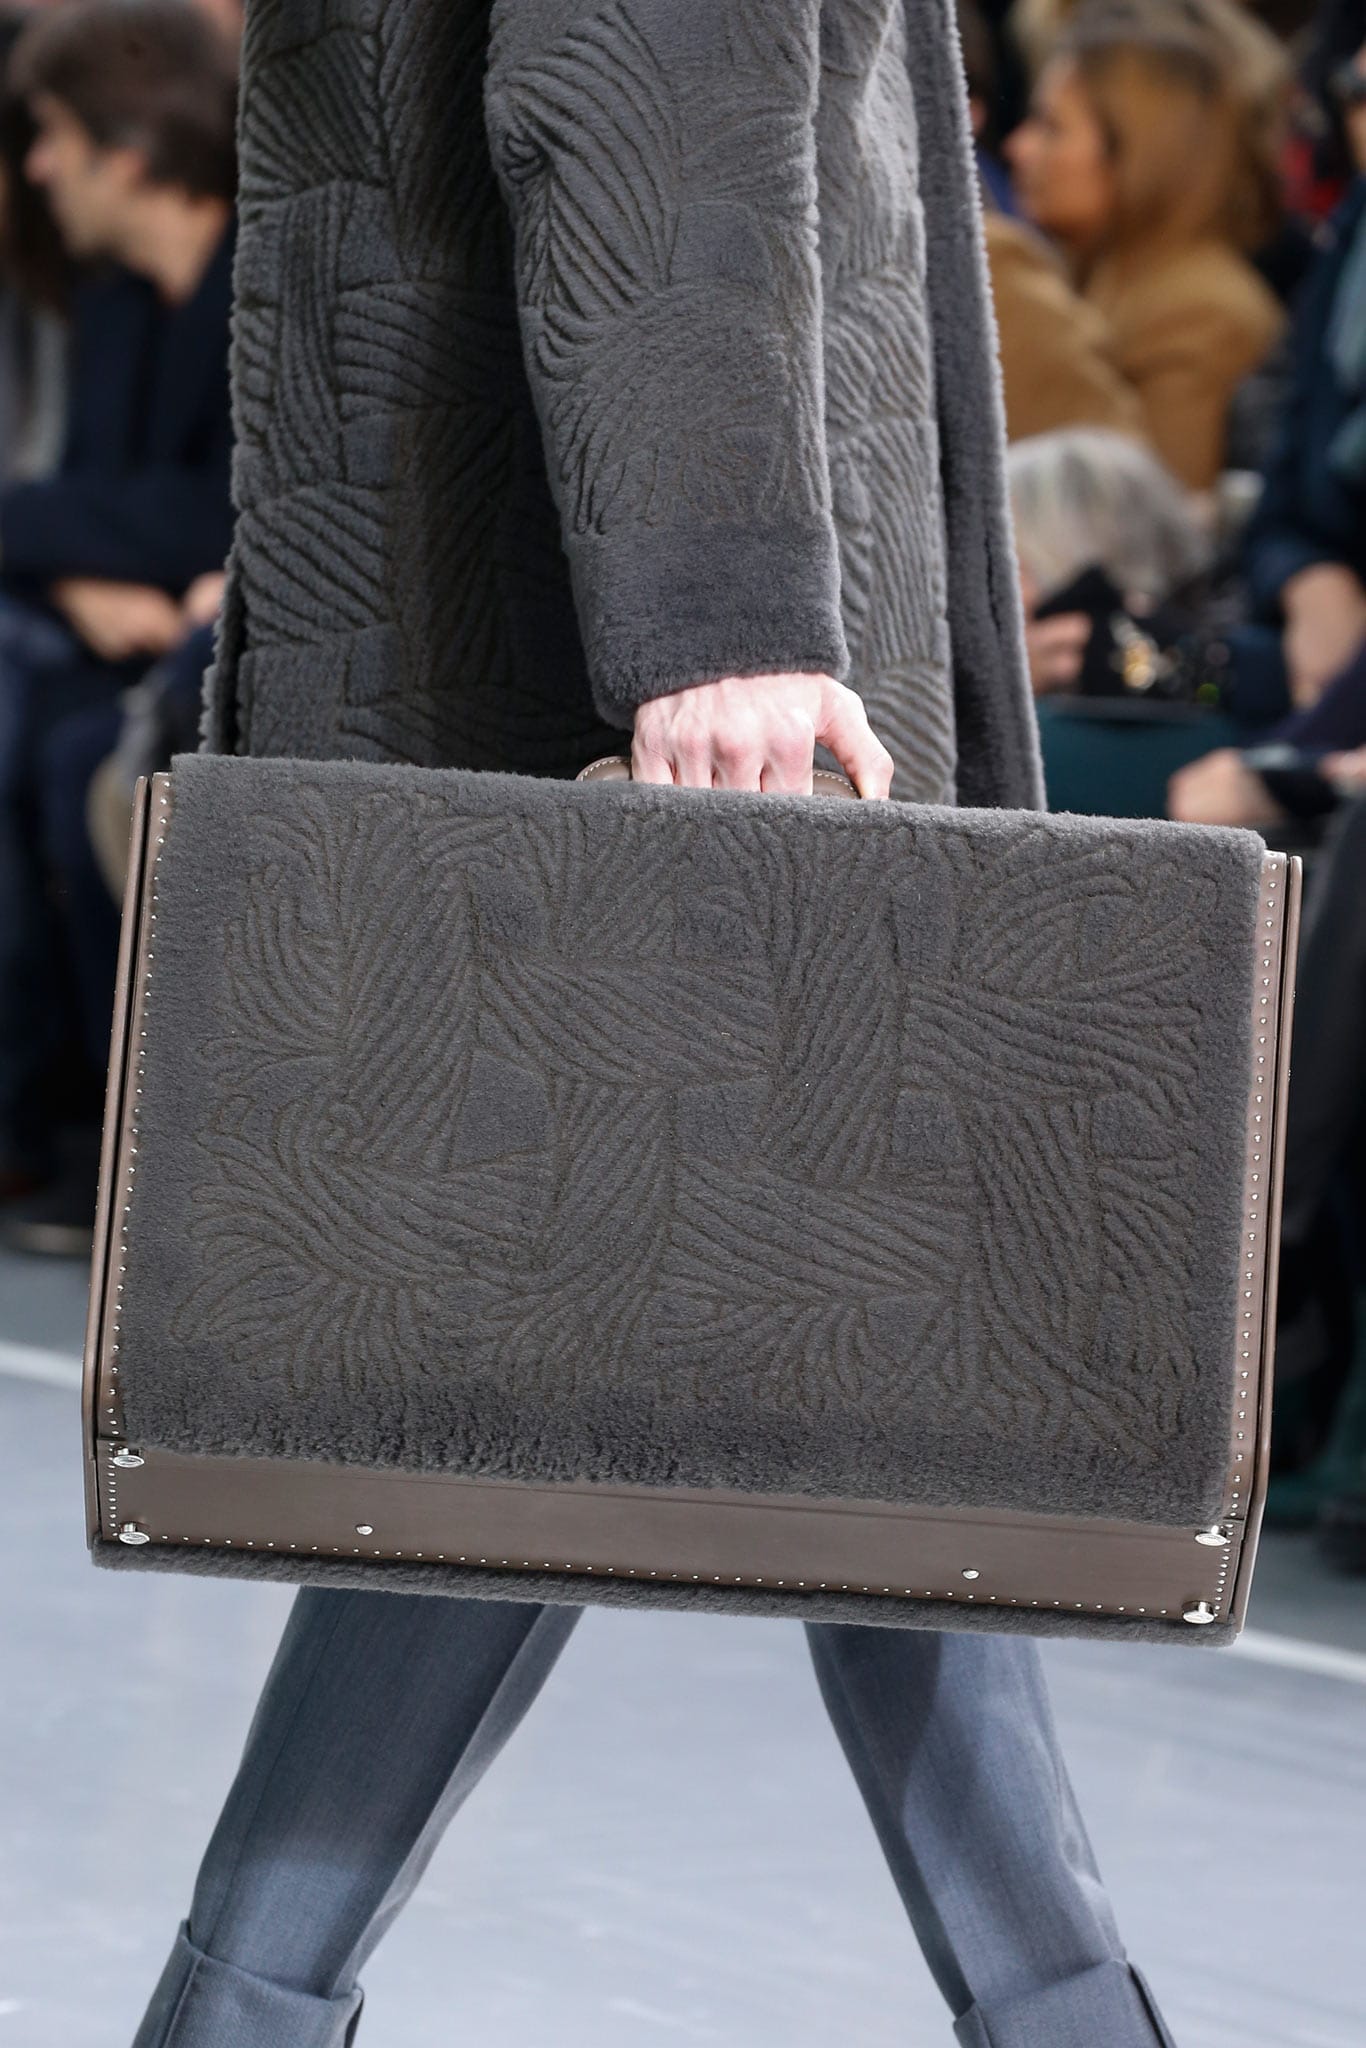 Louis Vuitton Famous world Decke Damier Grau Kashmir Leinen Seide